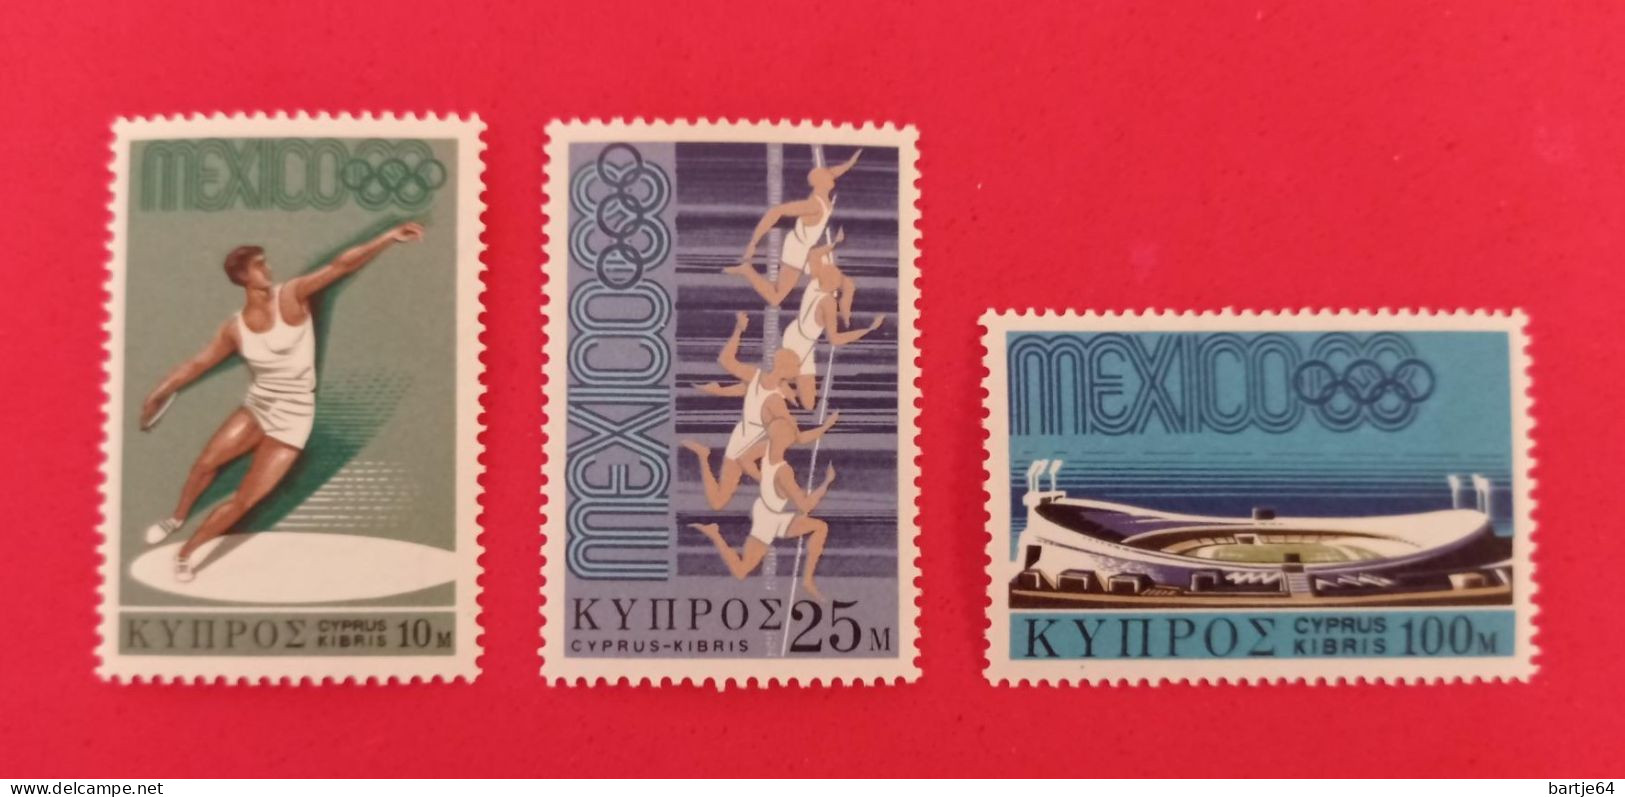 1968 Cyprus Islands - Serie MNH - Verano 1968: México